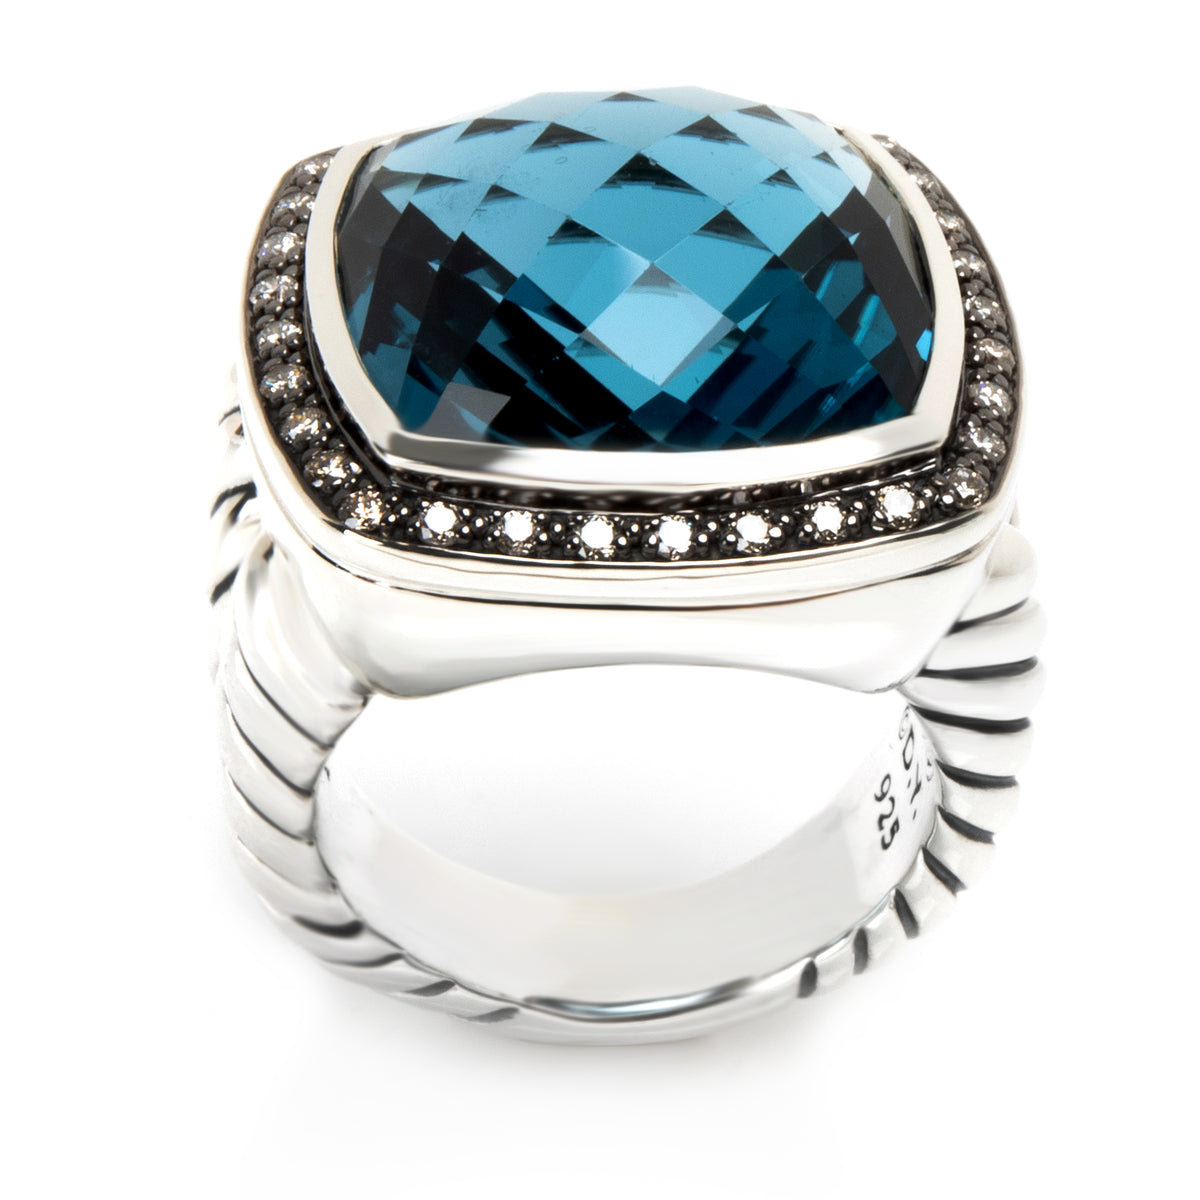 David Yurman Albion Blue Topaz & Diamond Ring in Sterling Silver